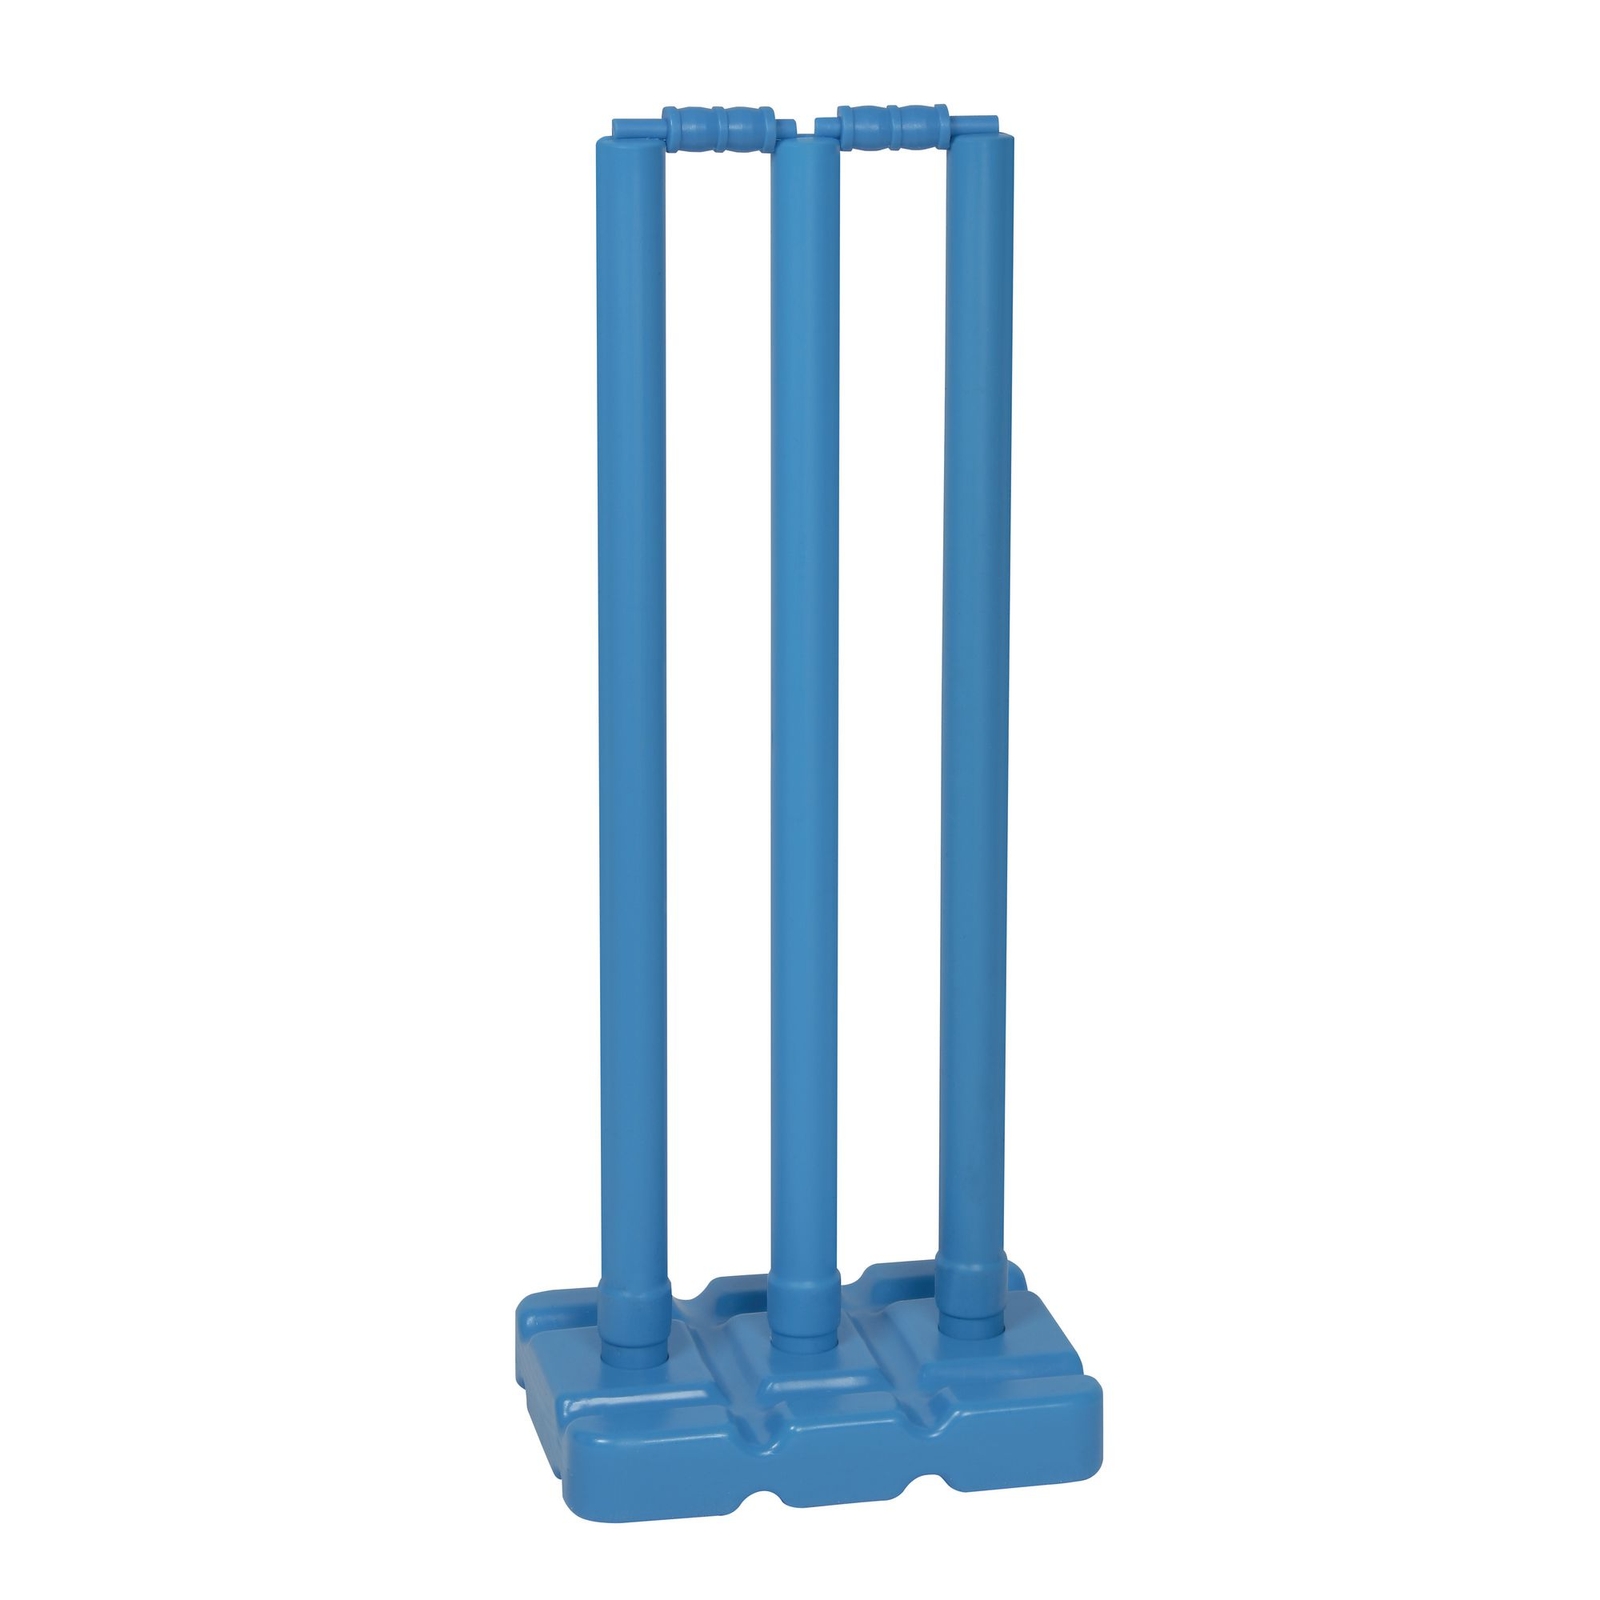 Kwik Cricket Stump Set